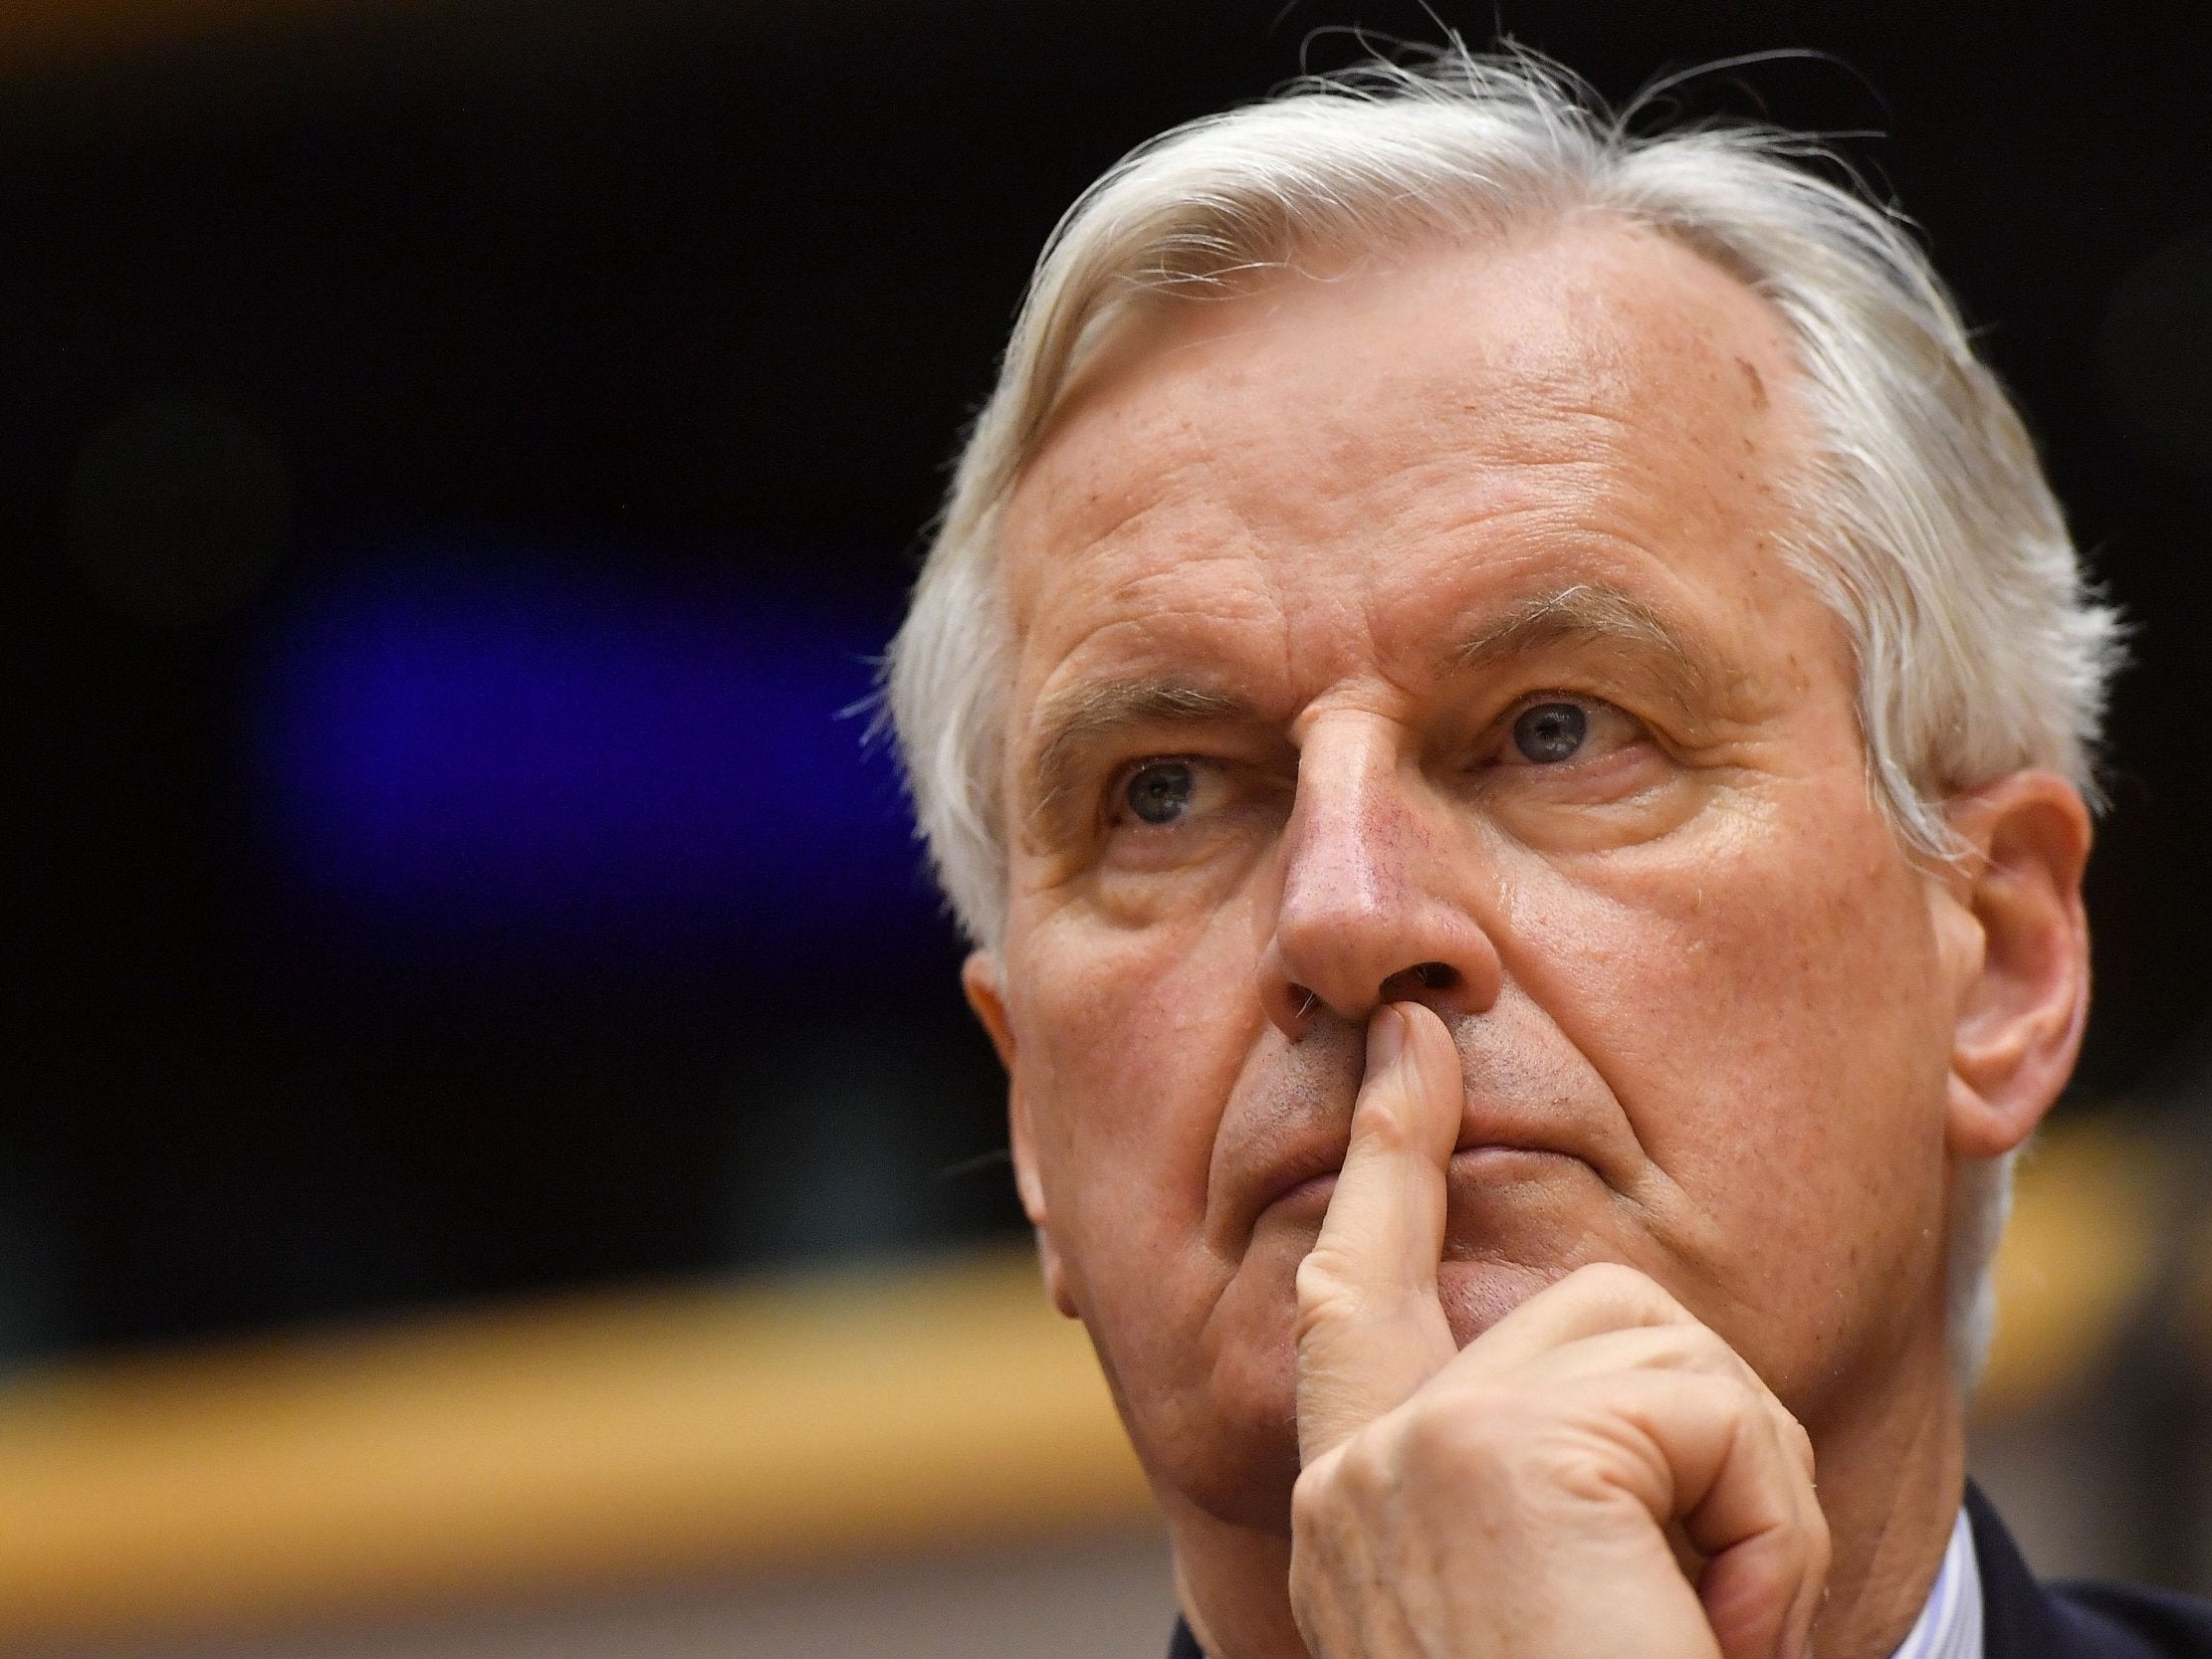 Michel Barnier is visiting Ireland on Monday